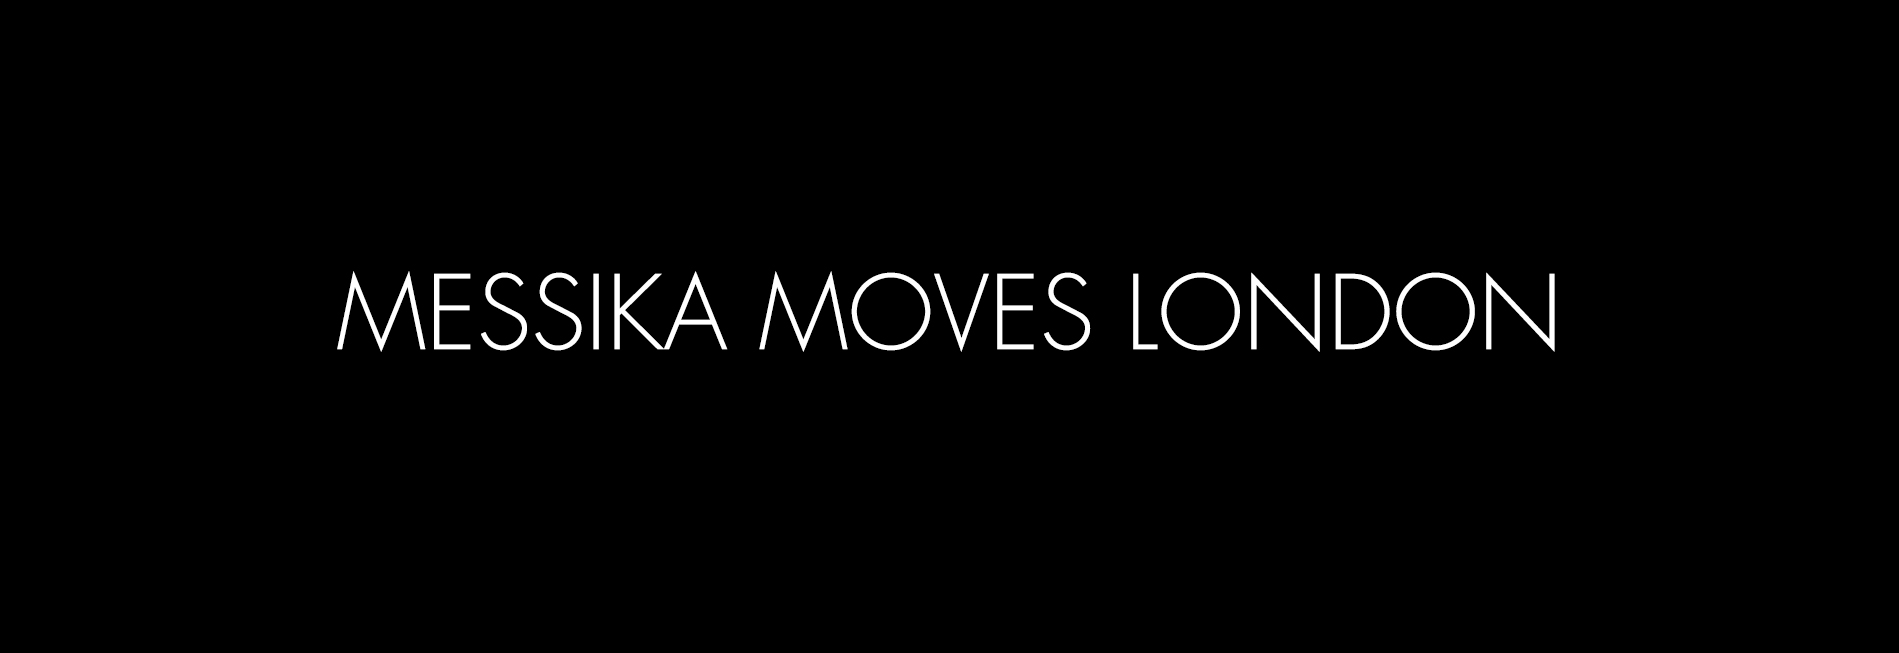 Messika Moves London !